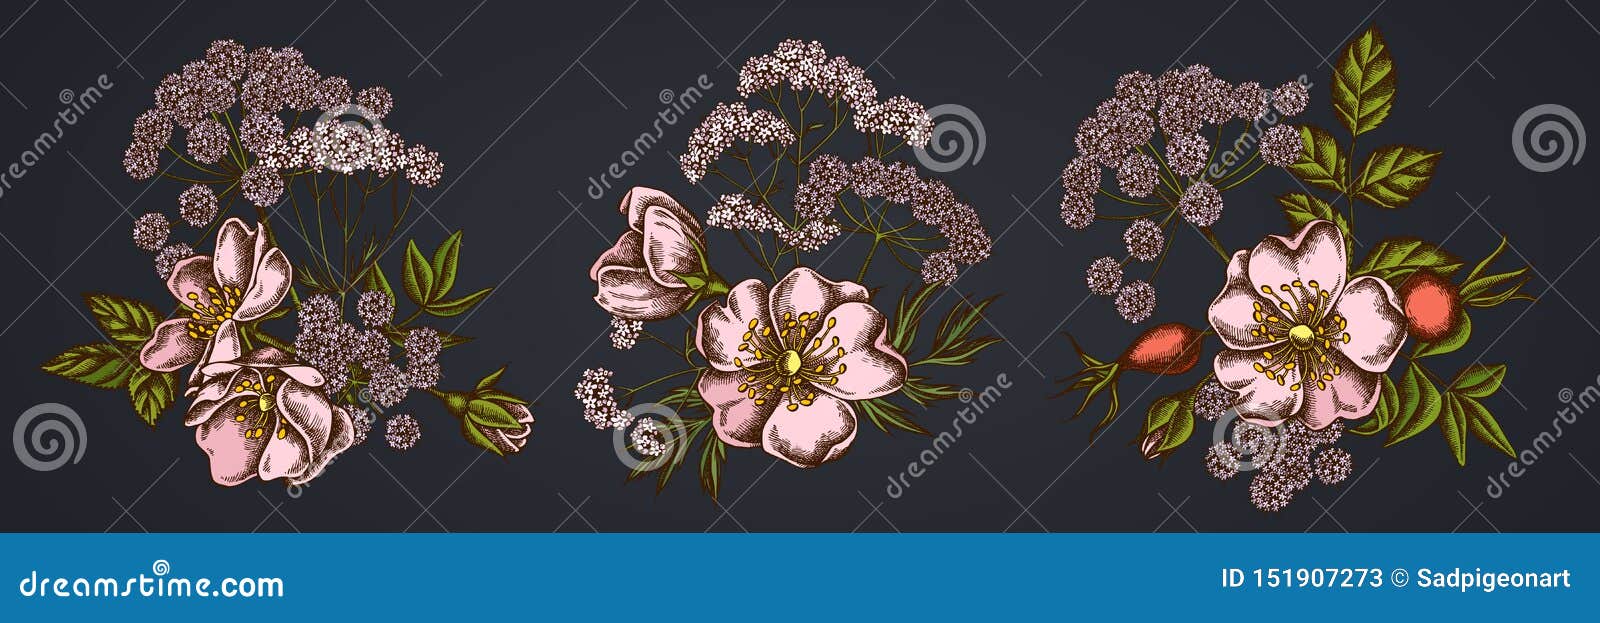 Flower Bouquet Of Dog Rose Valerian Angelica Stock Vector Illustration Of Bush Decoration 151907273